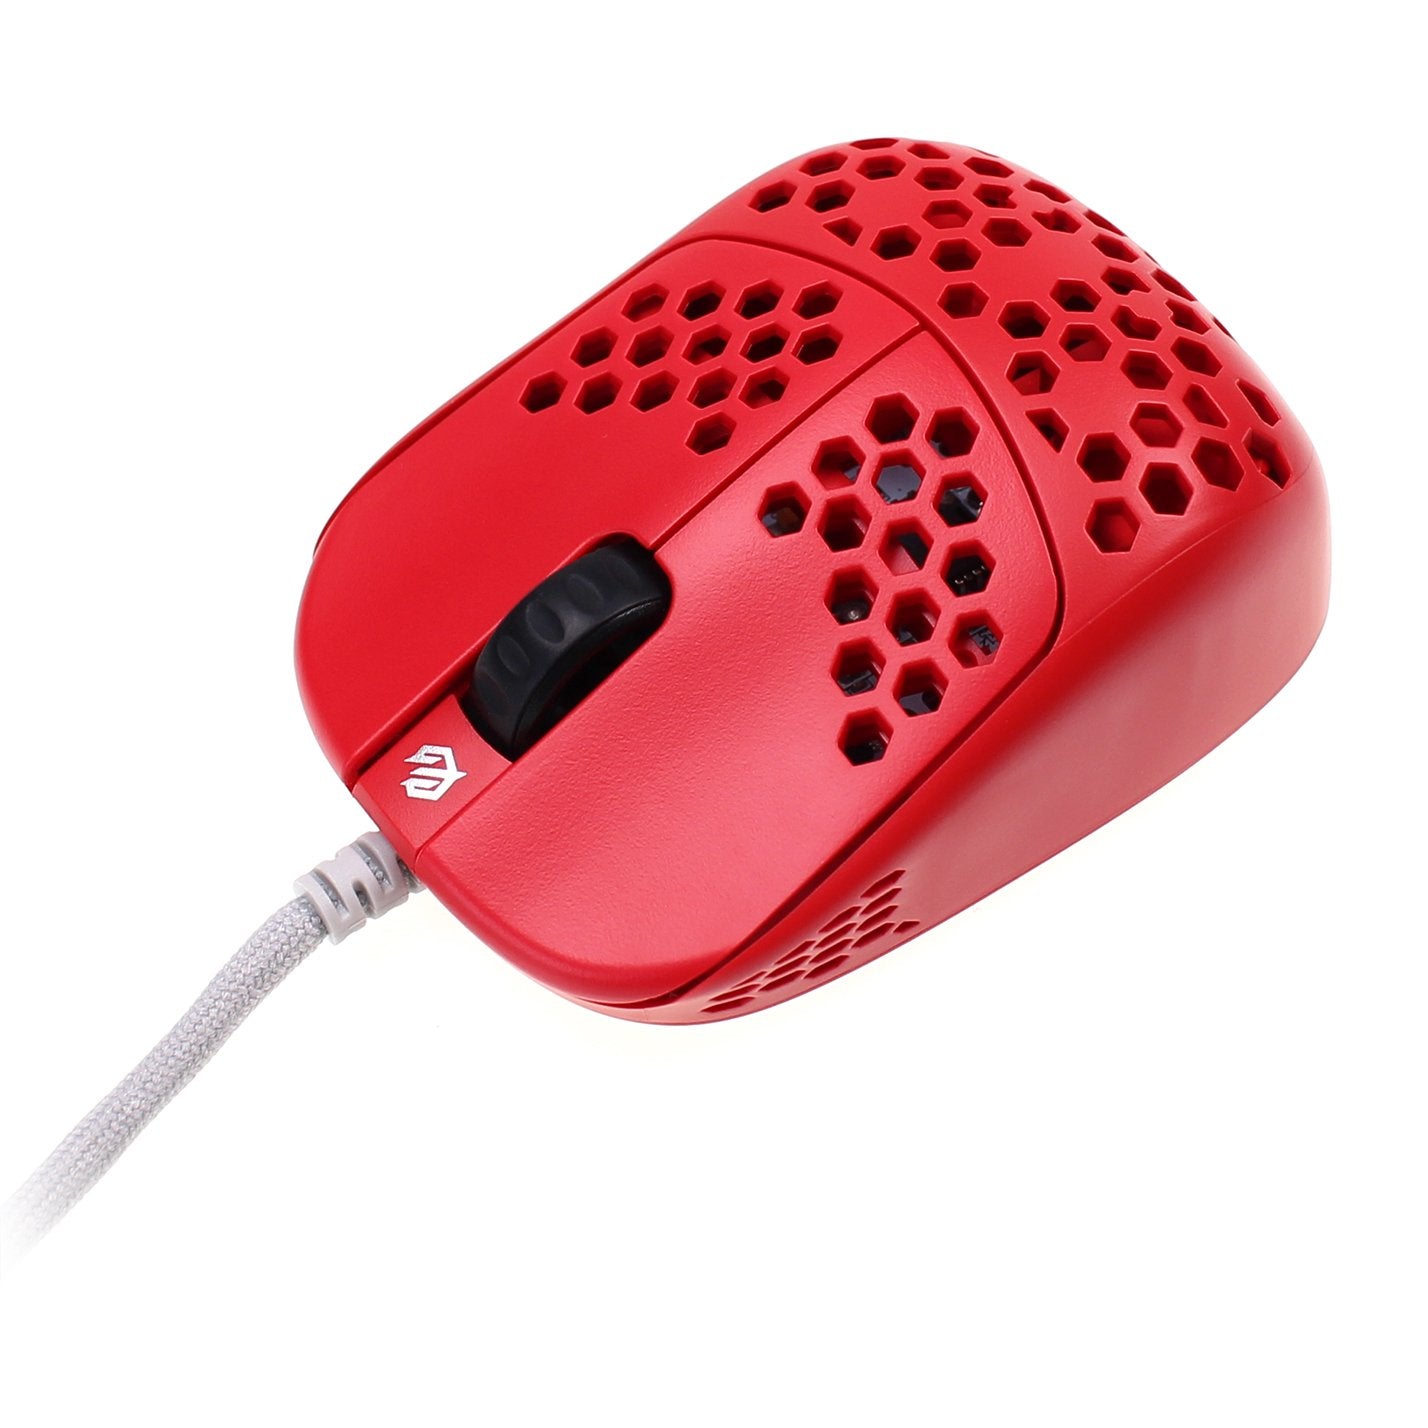 Net Ingeniører Terapi G-Wolves Husky Red Fingertip Gaming Mouse : Addice Inc – Addice Inc